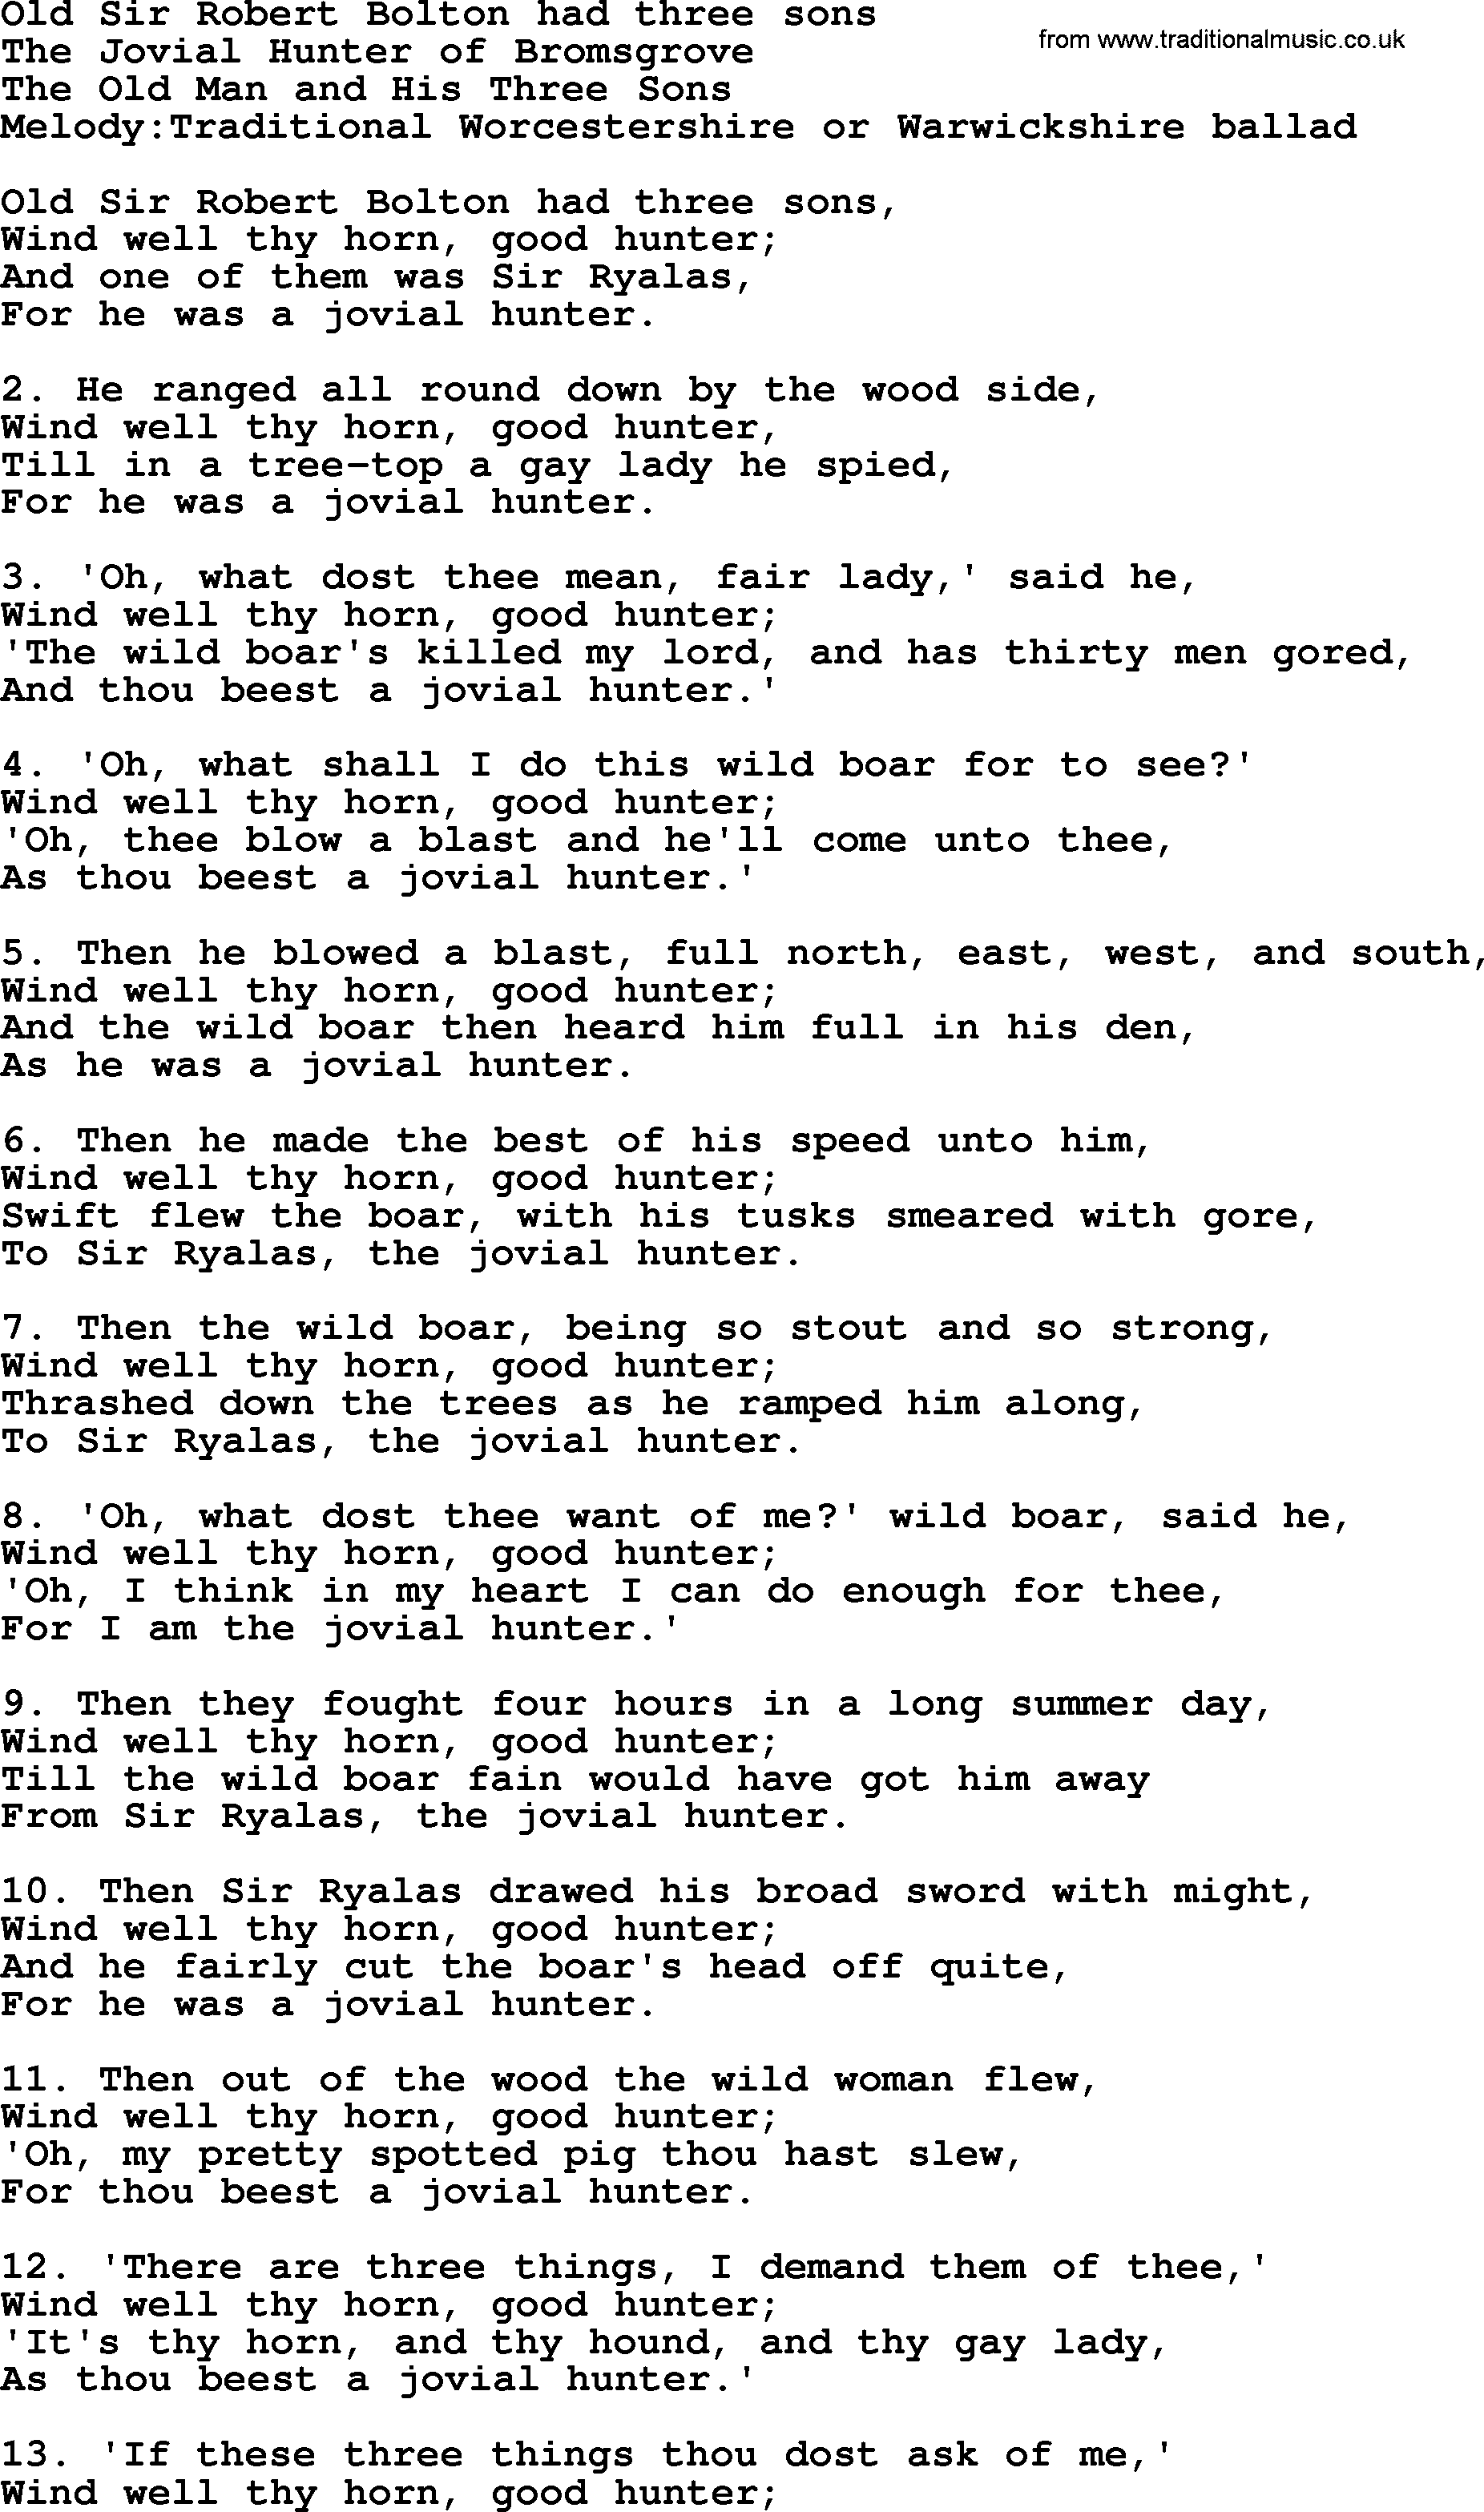 Old English Song: Old Sir Robert Bolton Had Three Sons lyrics